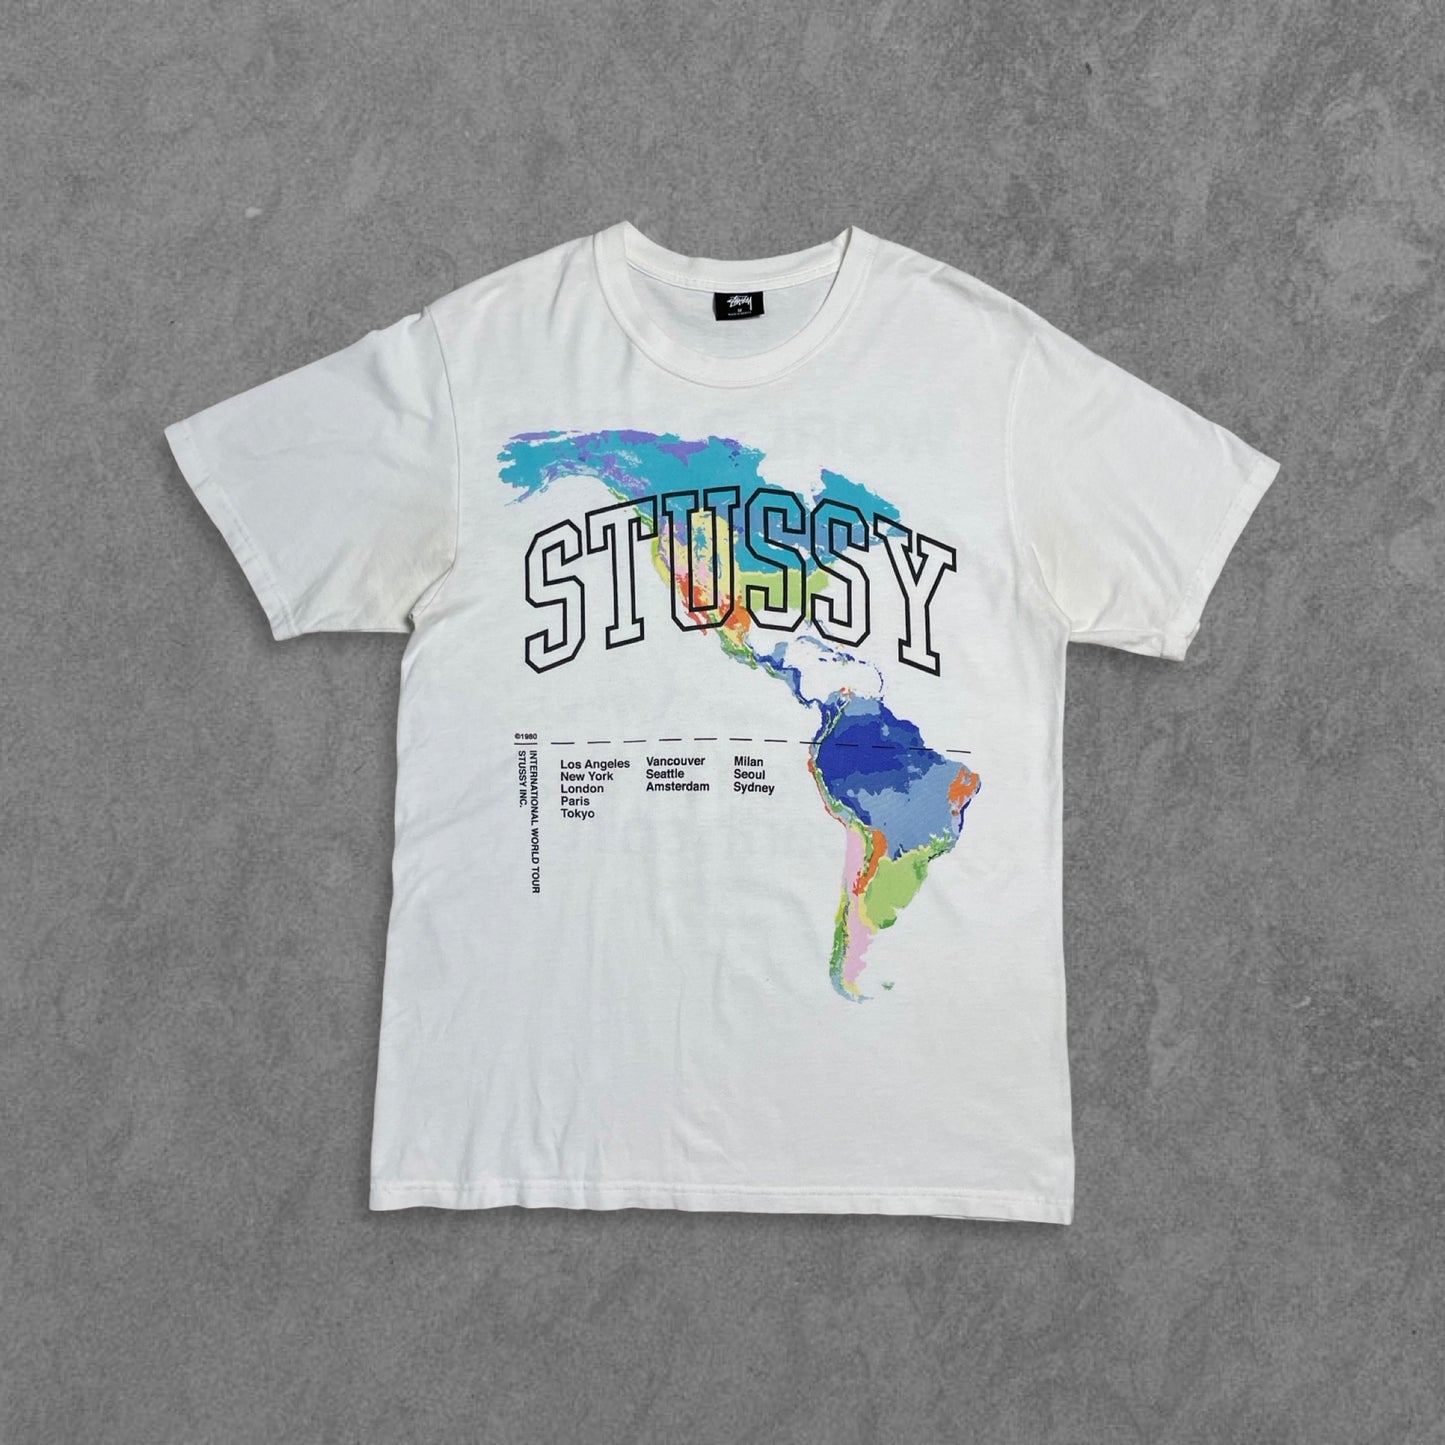 Stussy Worldwide Tour (M/L)